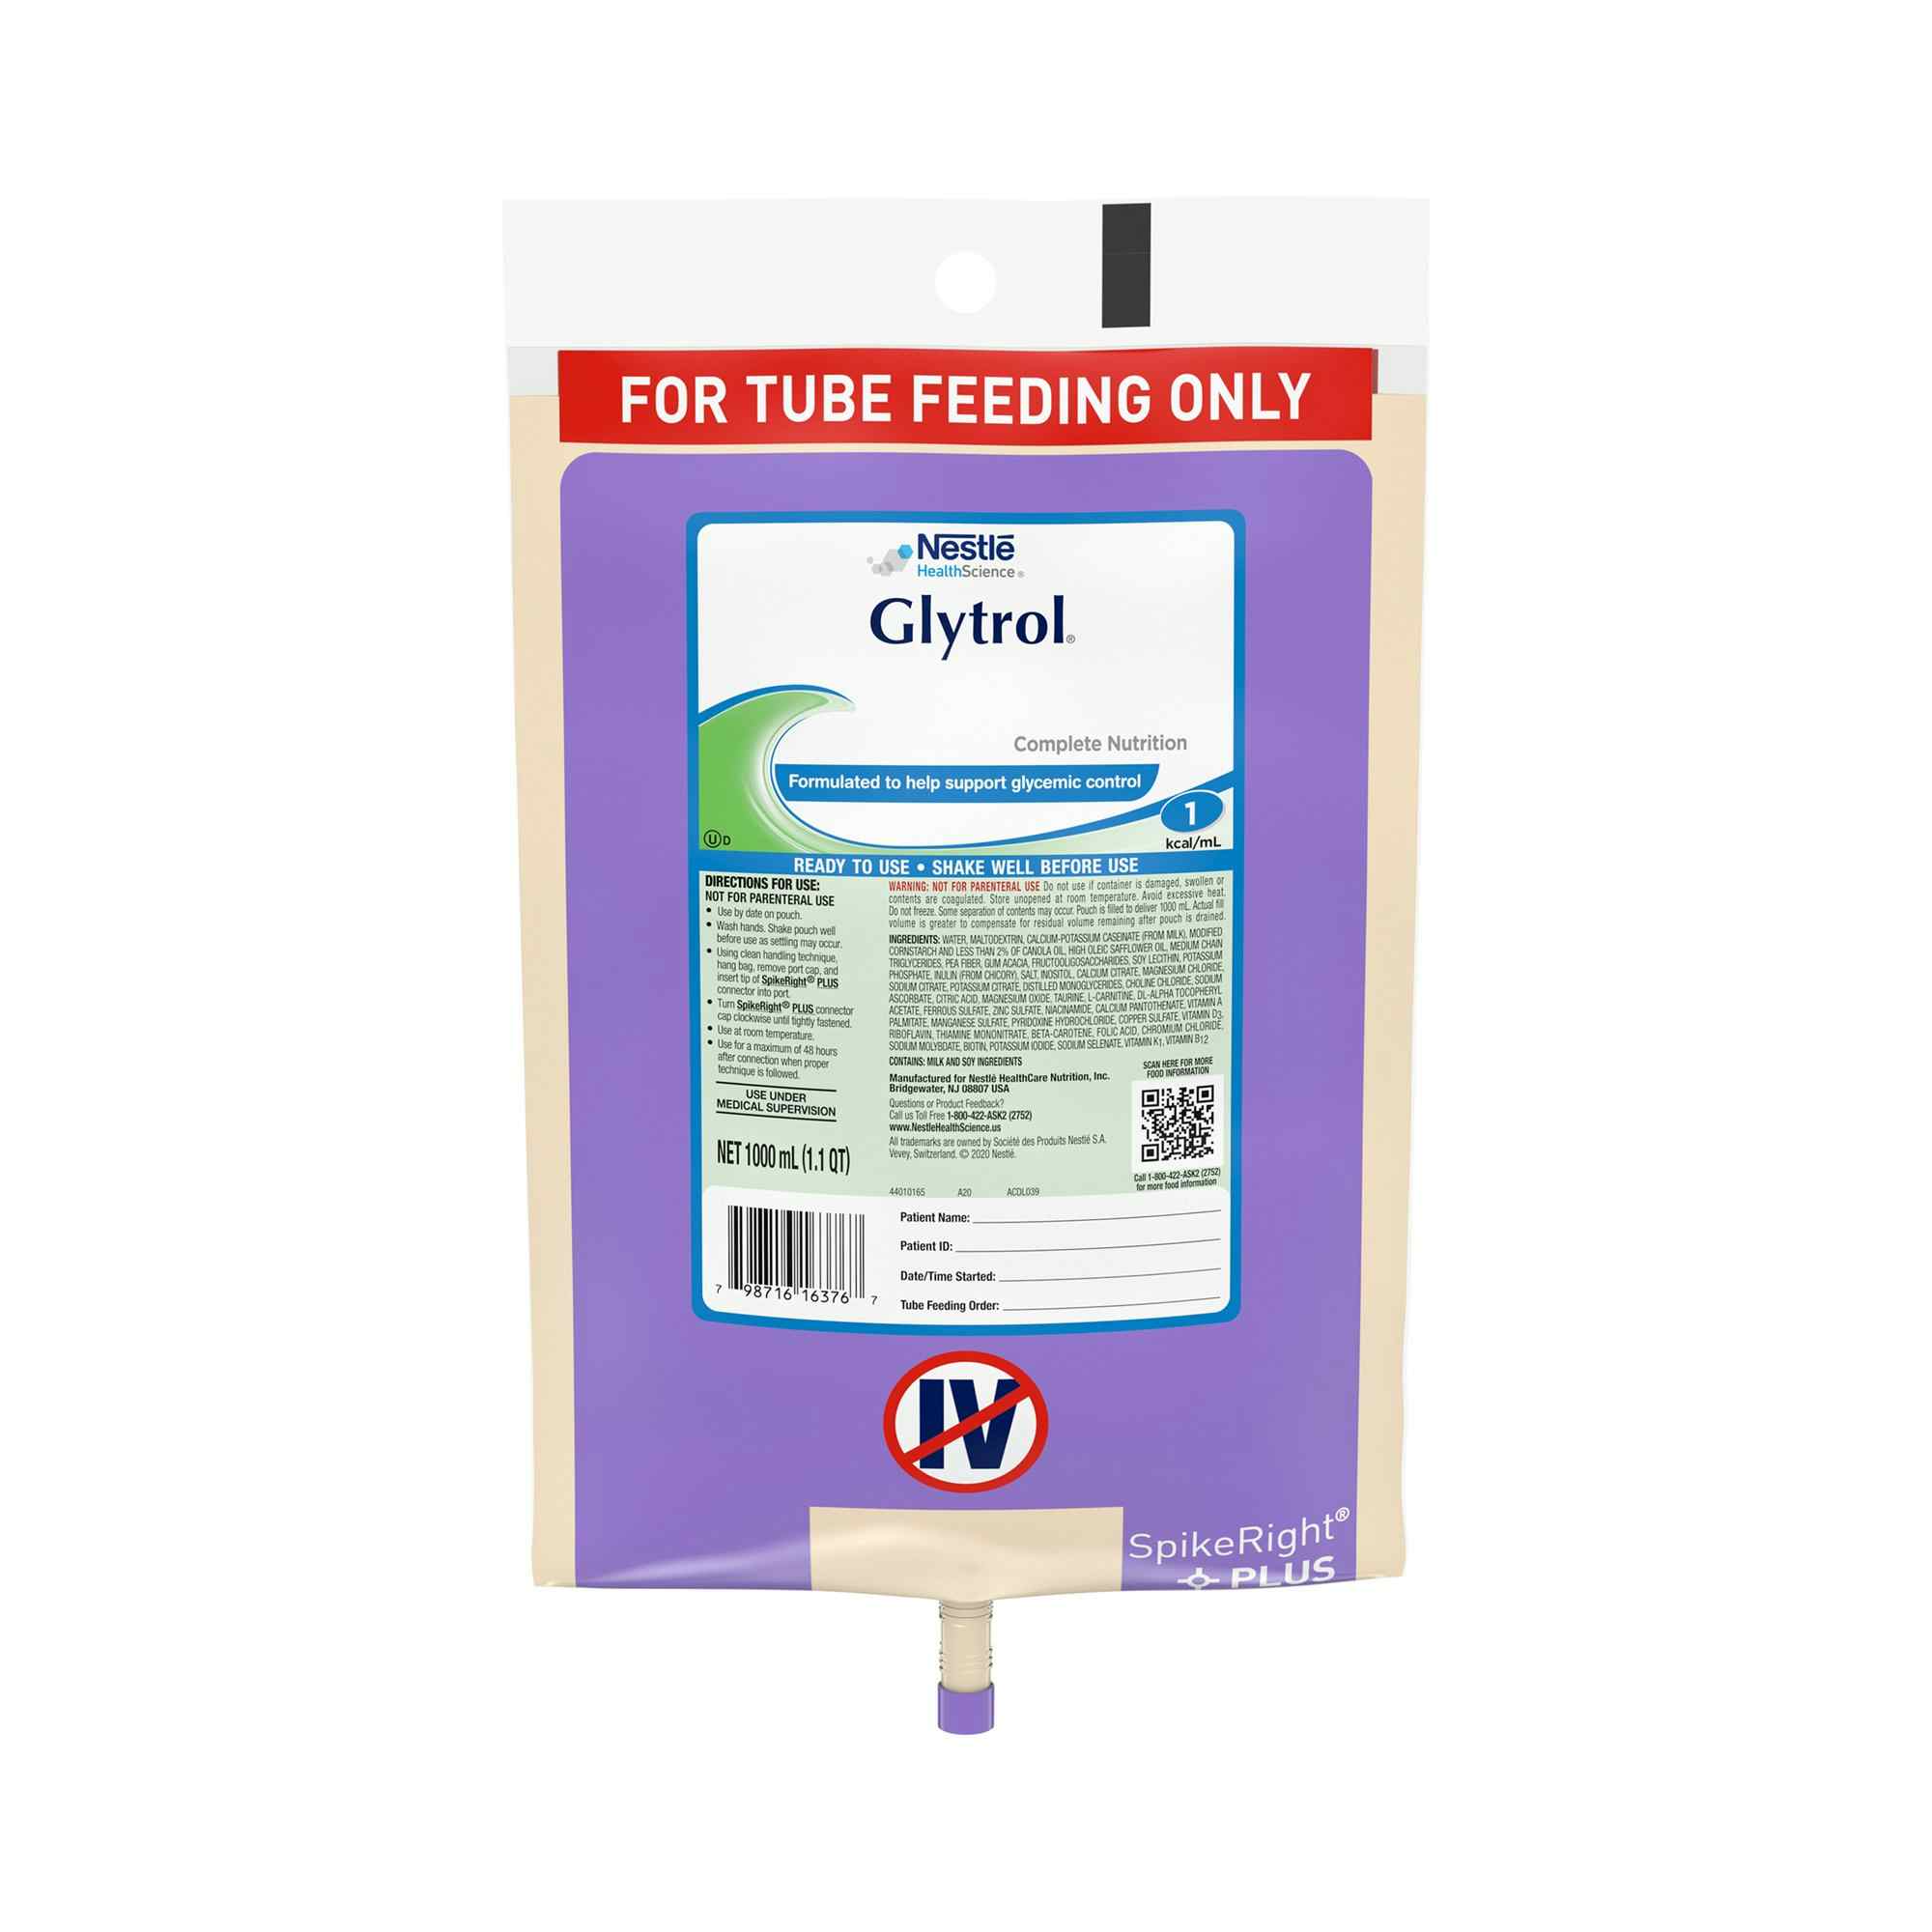 Nestle HealthScience Glytrol Complete Nutrition Tube Feeding Formula, 10798716223901, 33.8 oz. - Case of 6